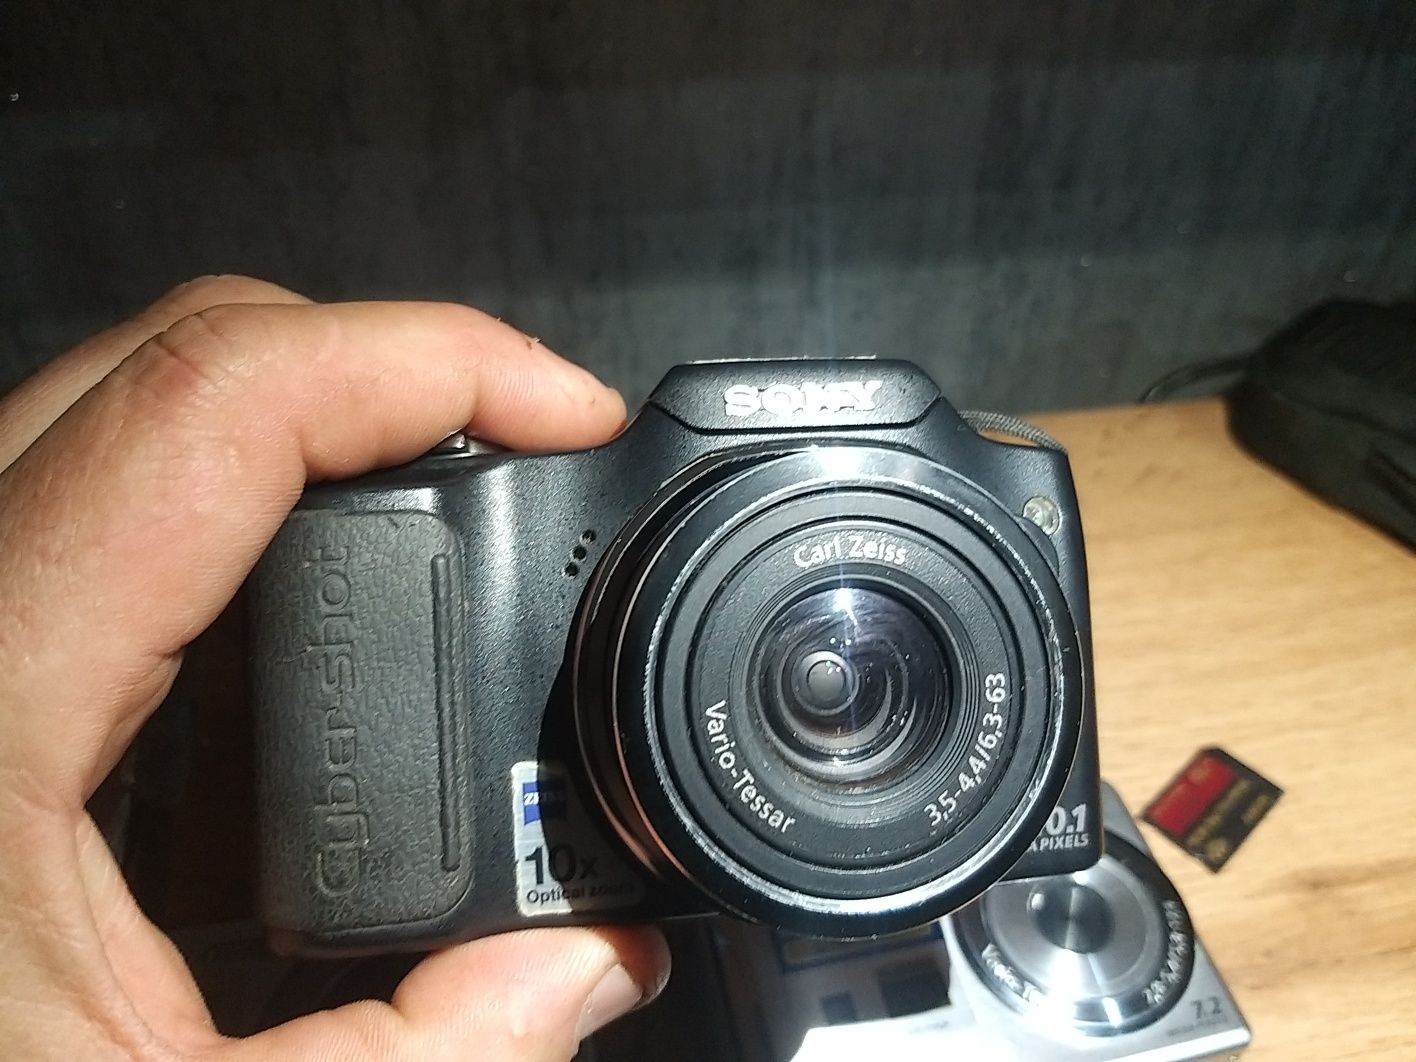 Цифровой фотоаппарат Sony Cyber shot DSC -H20 Сонт 10.1 пикселя